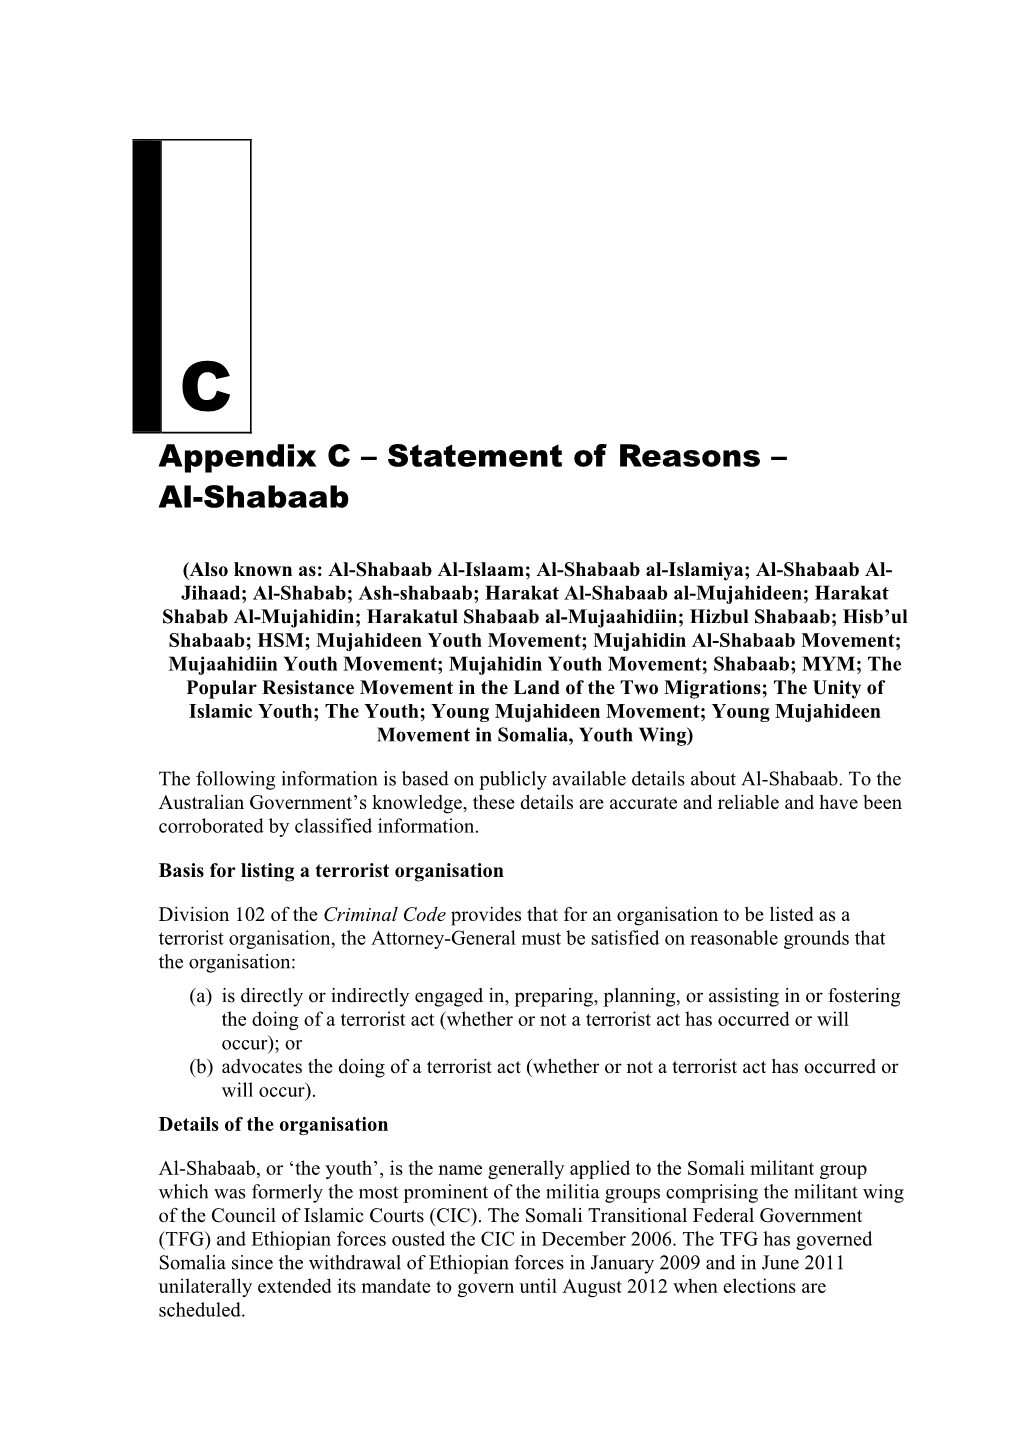 Appendix C: Statement of Reasons